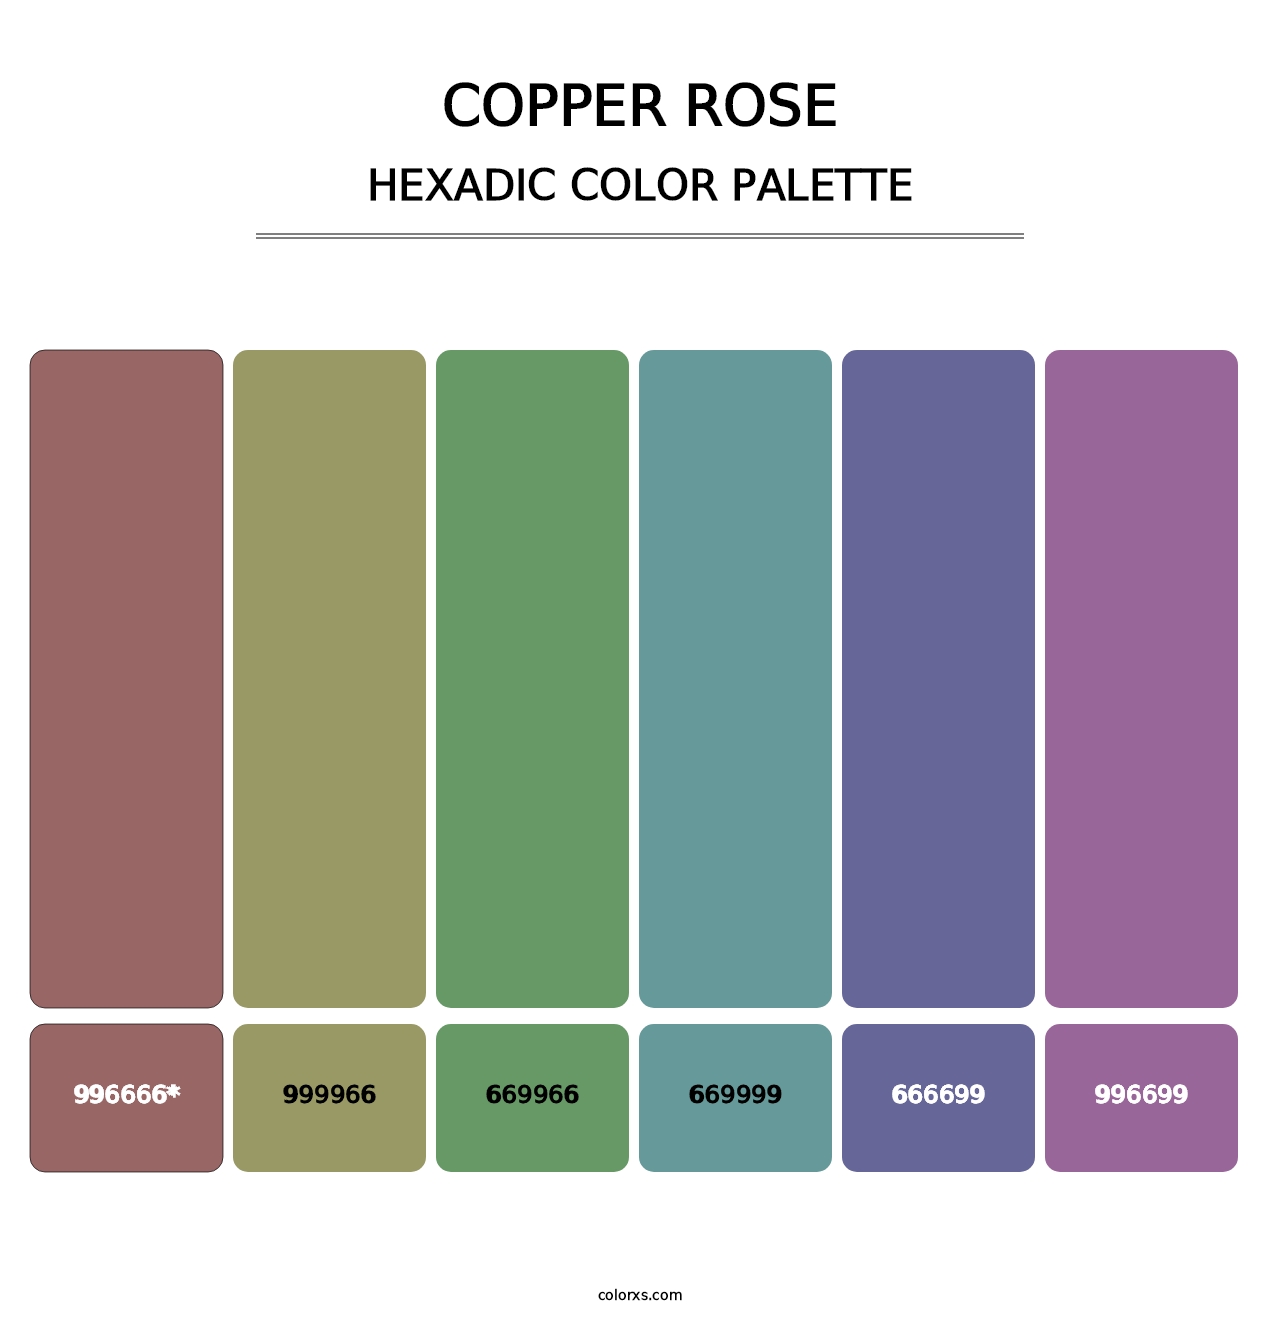 Copper rose - Hexadic Color Palette